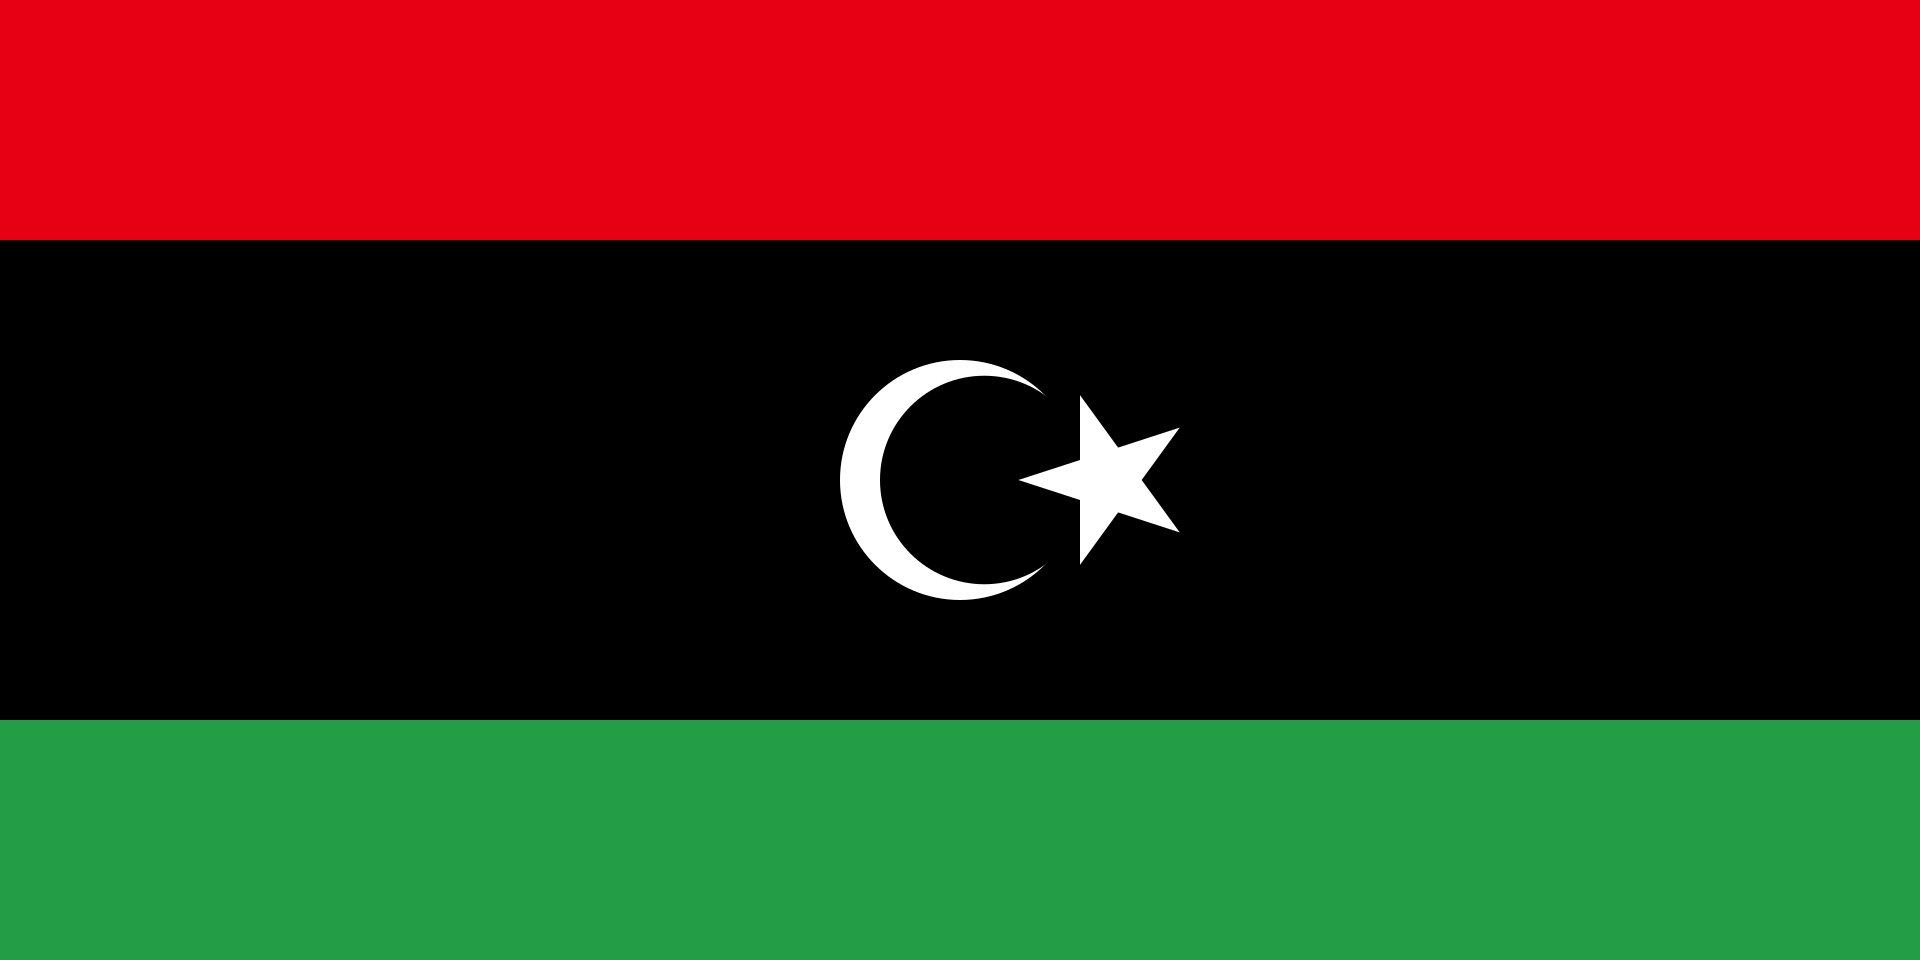 Flag of Libya.png